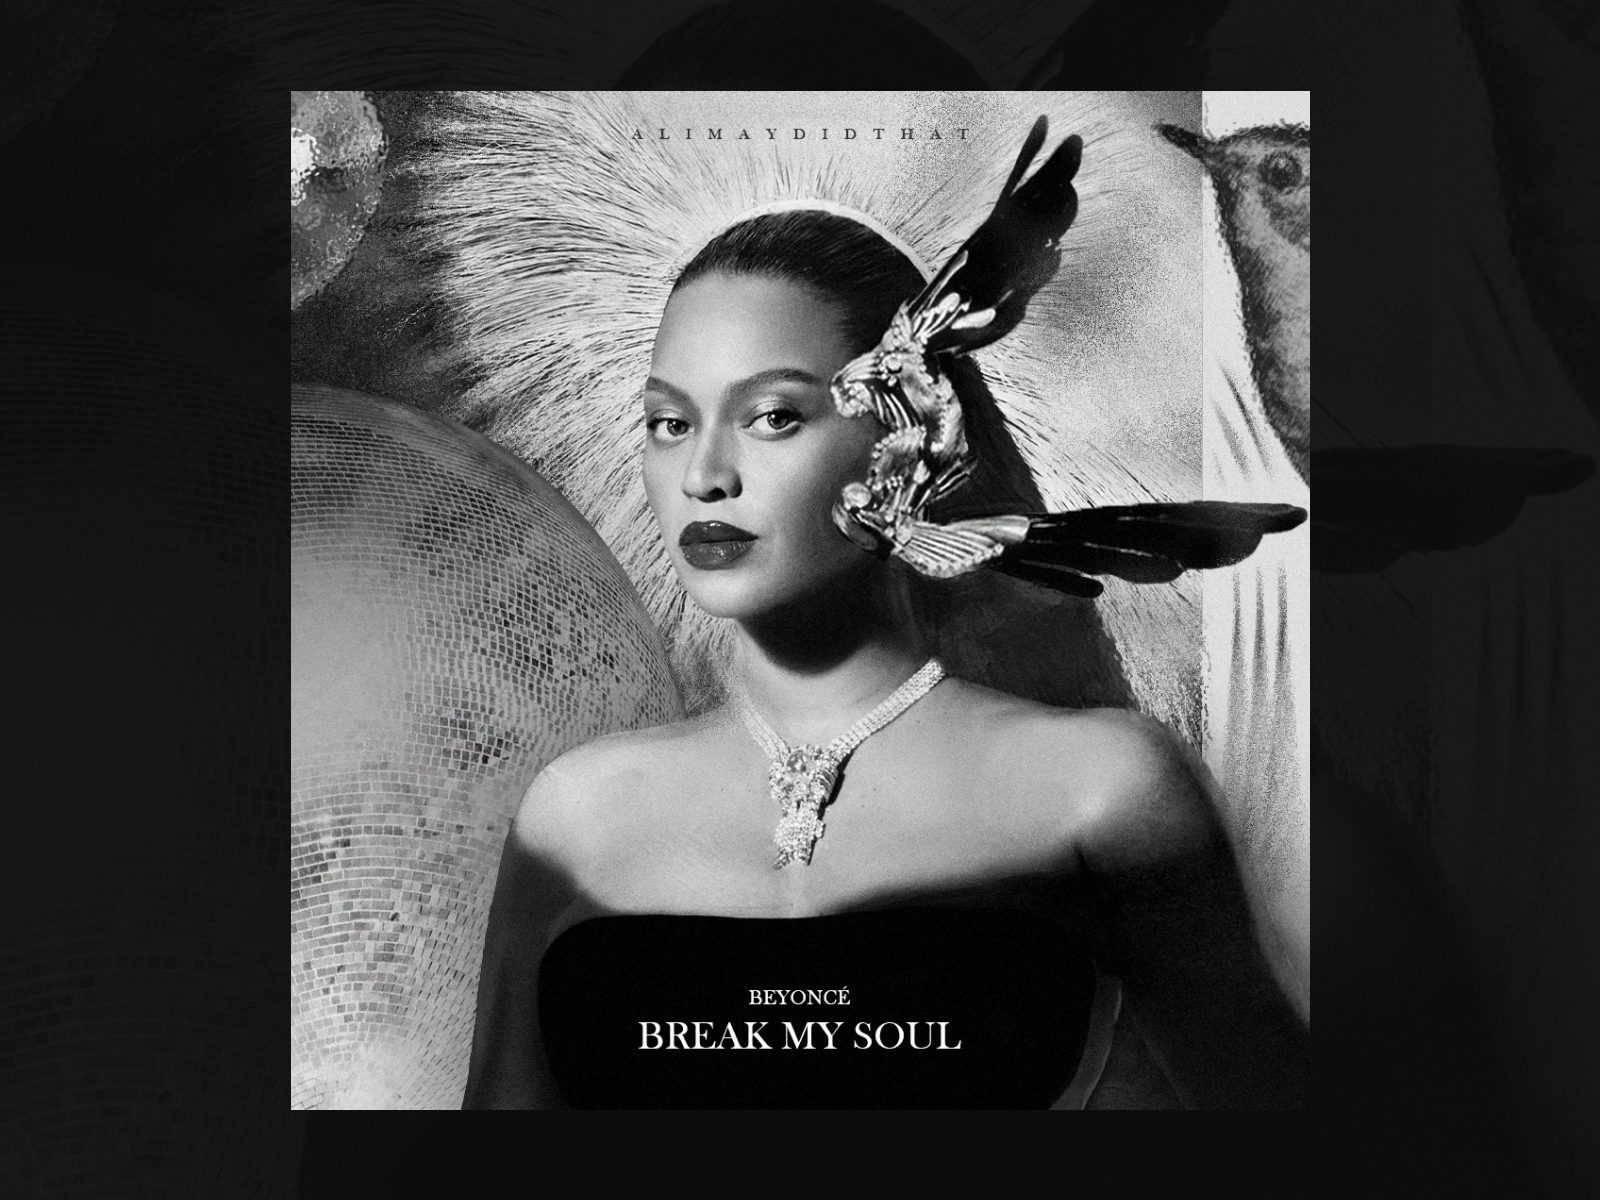 Break My Soul Beyoncé Concept Cover Art British Vogue By Alimaydidthat On Dribbble